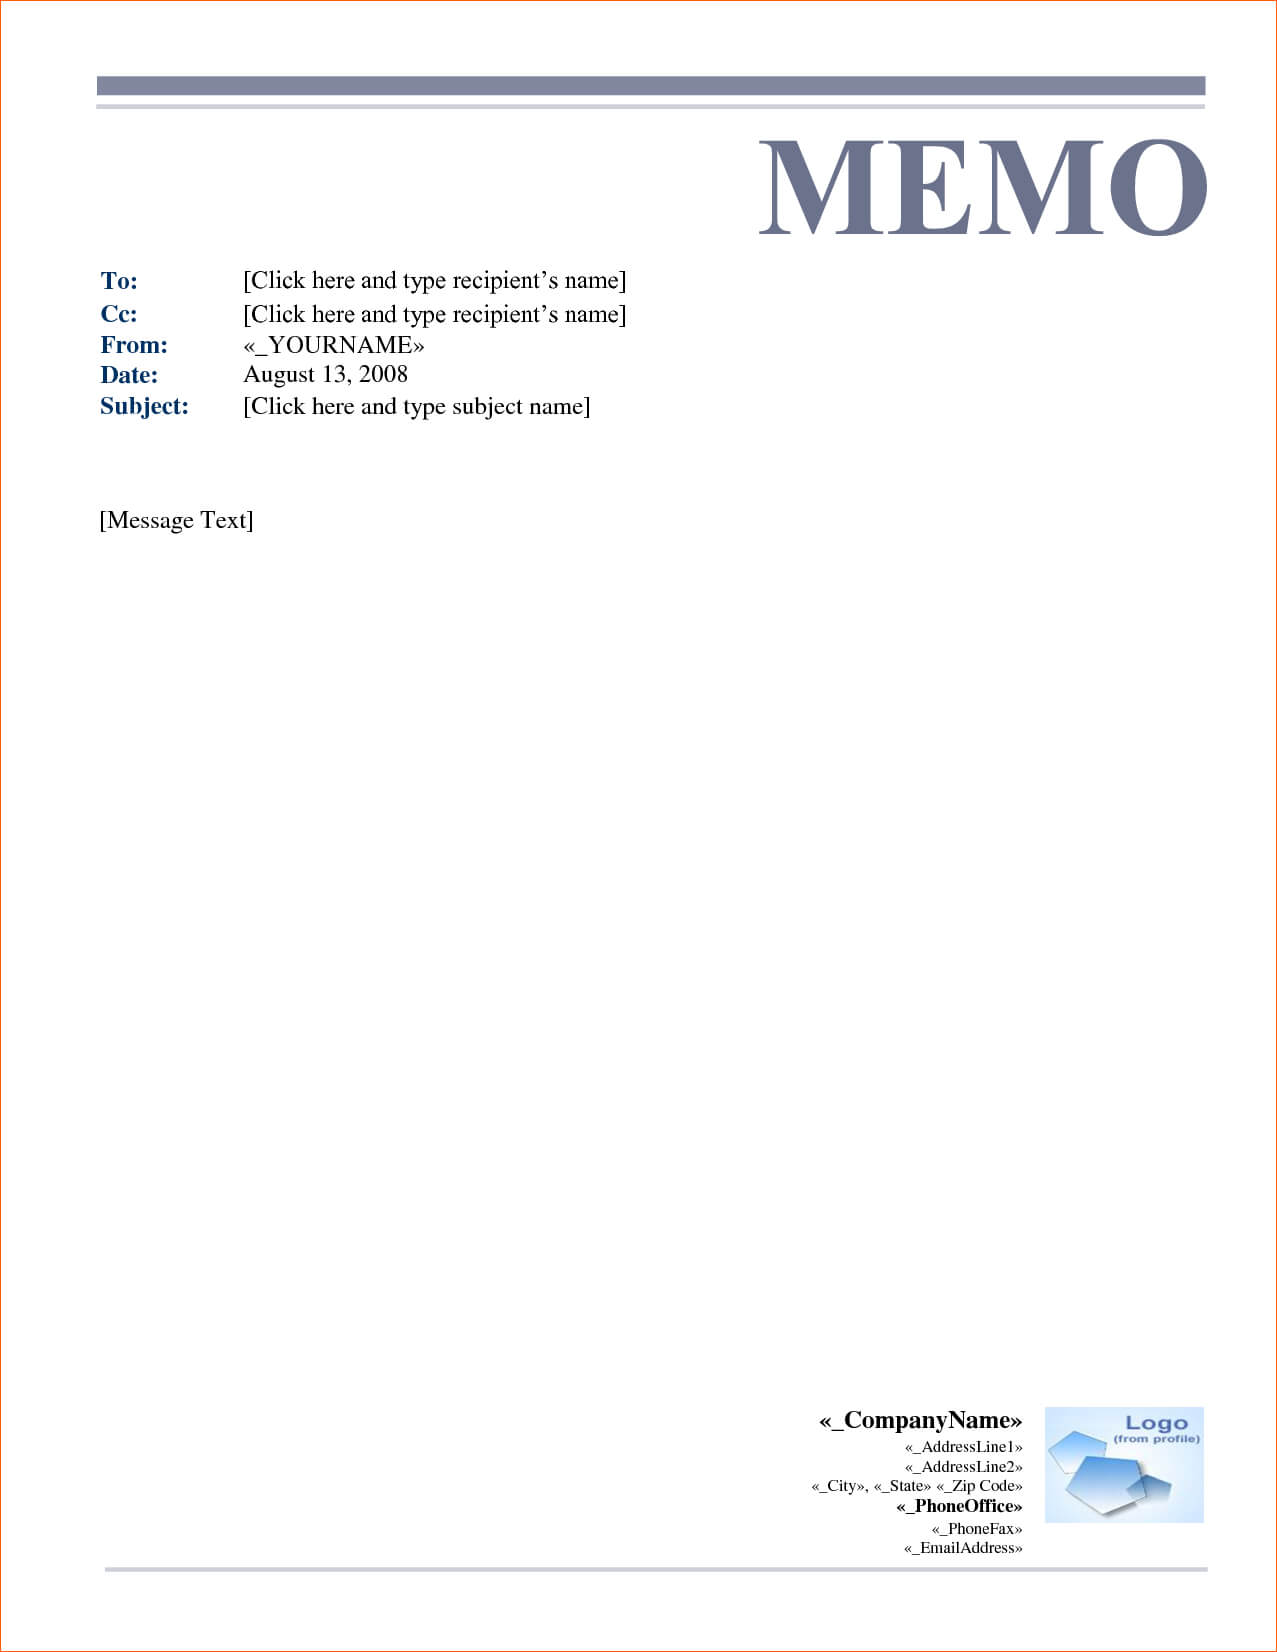 025 Memorandum Templates For Word Template Ideas Free Memo Pertaining To Memo Template Word 2013